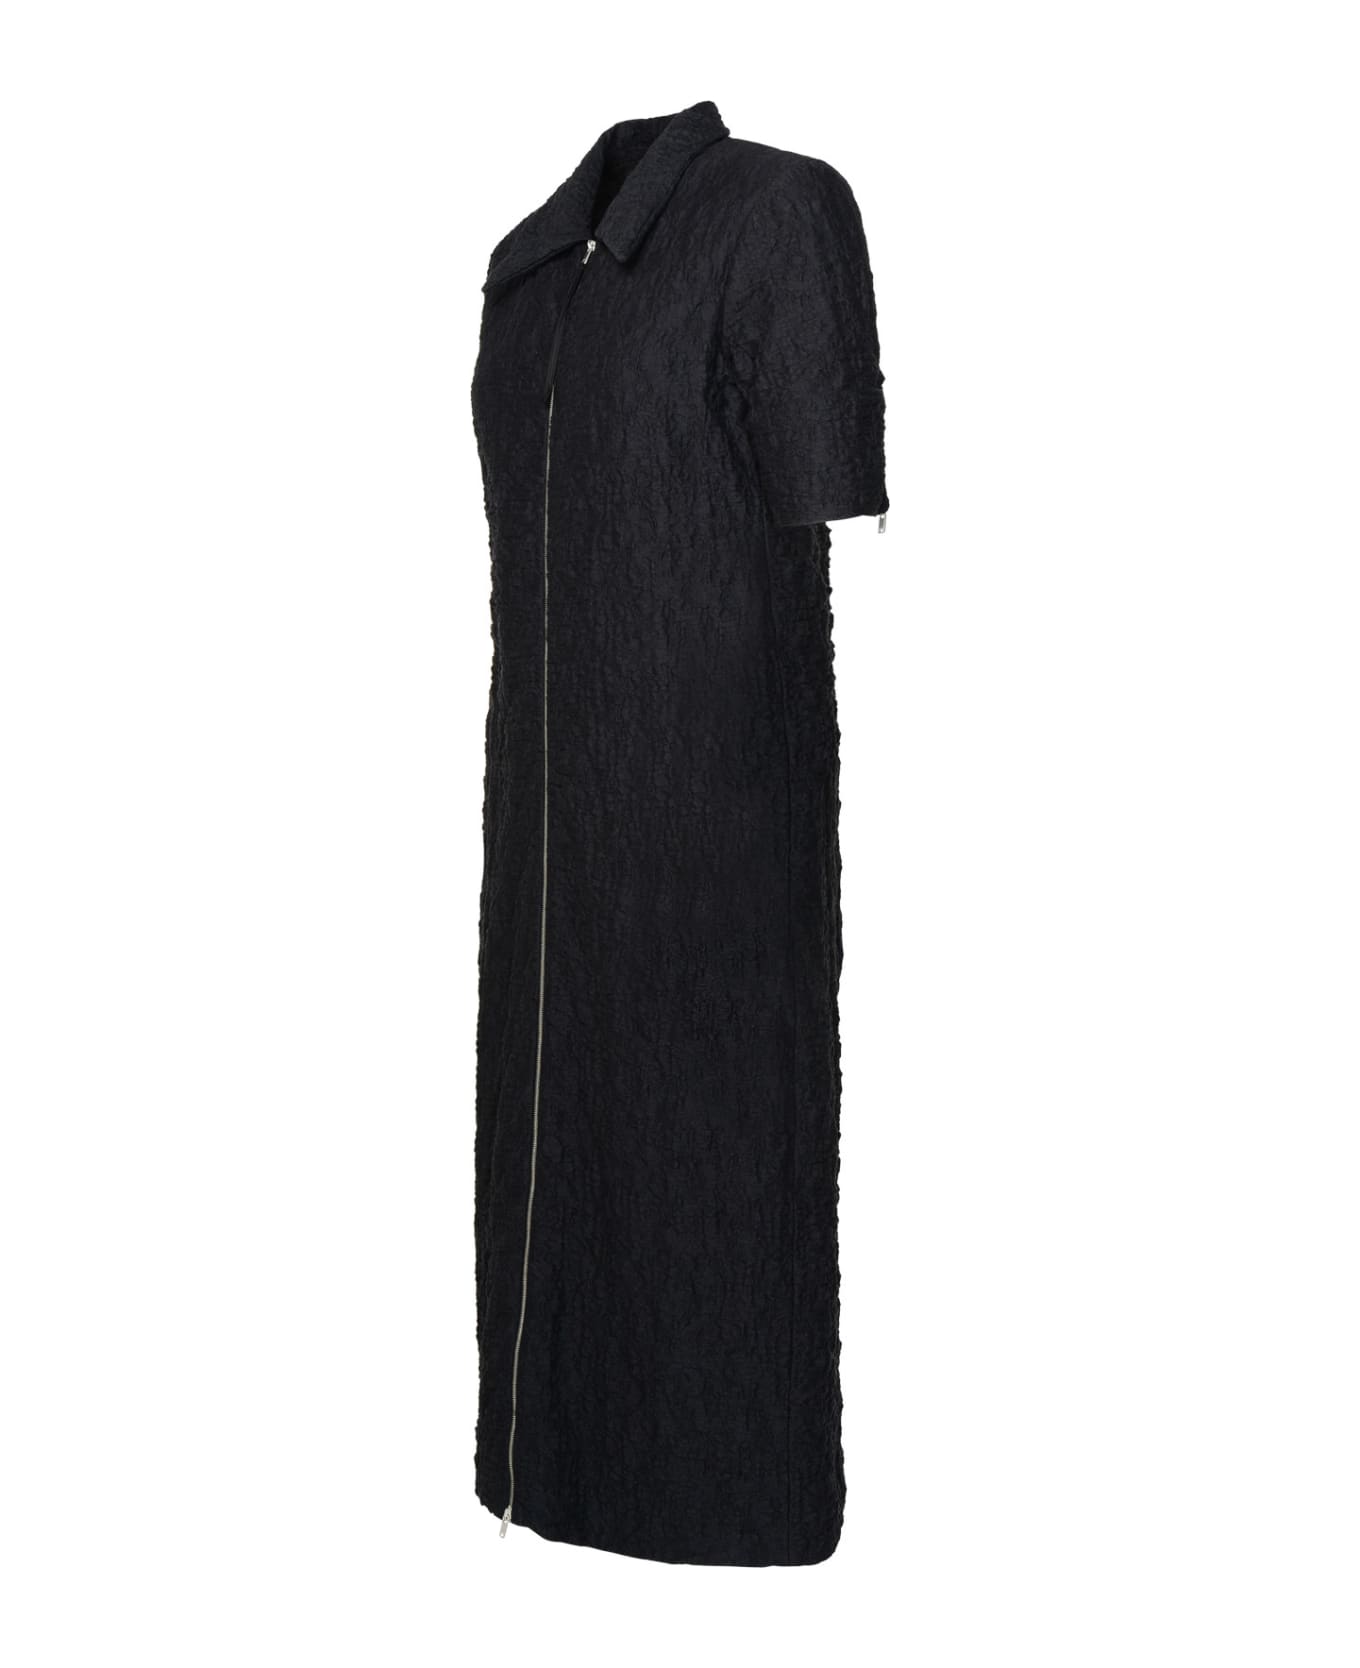 Jil Sander Black Cotton Blend Dress - Black